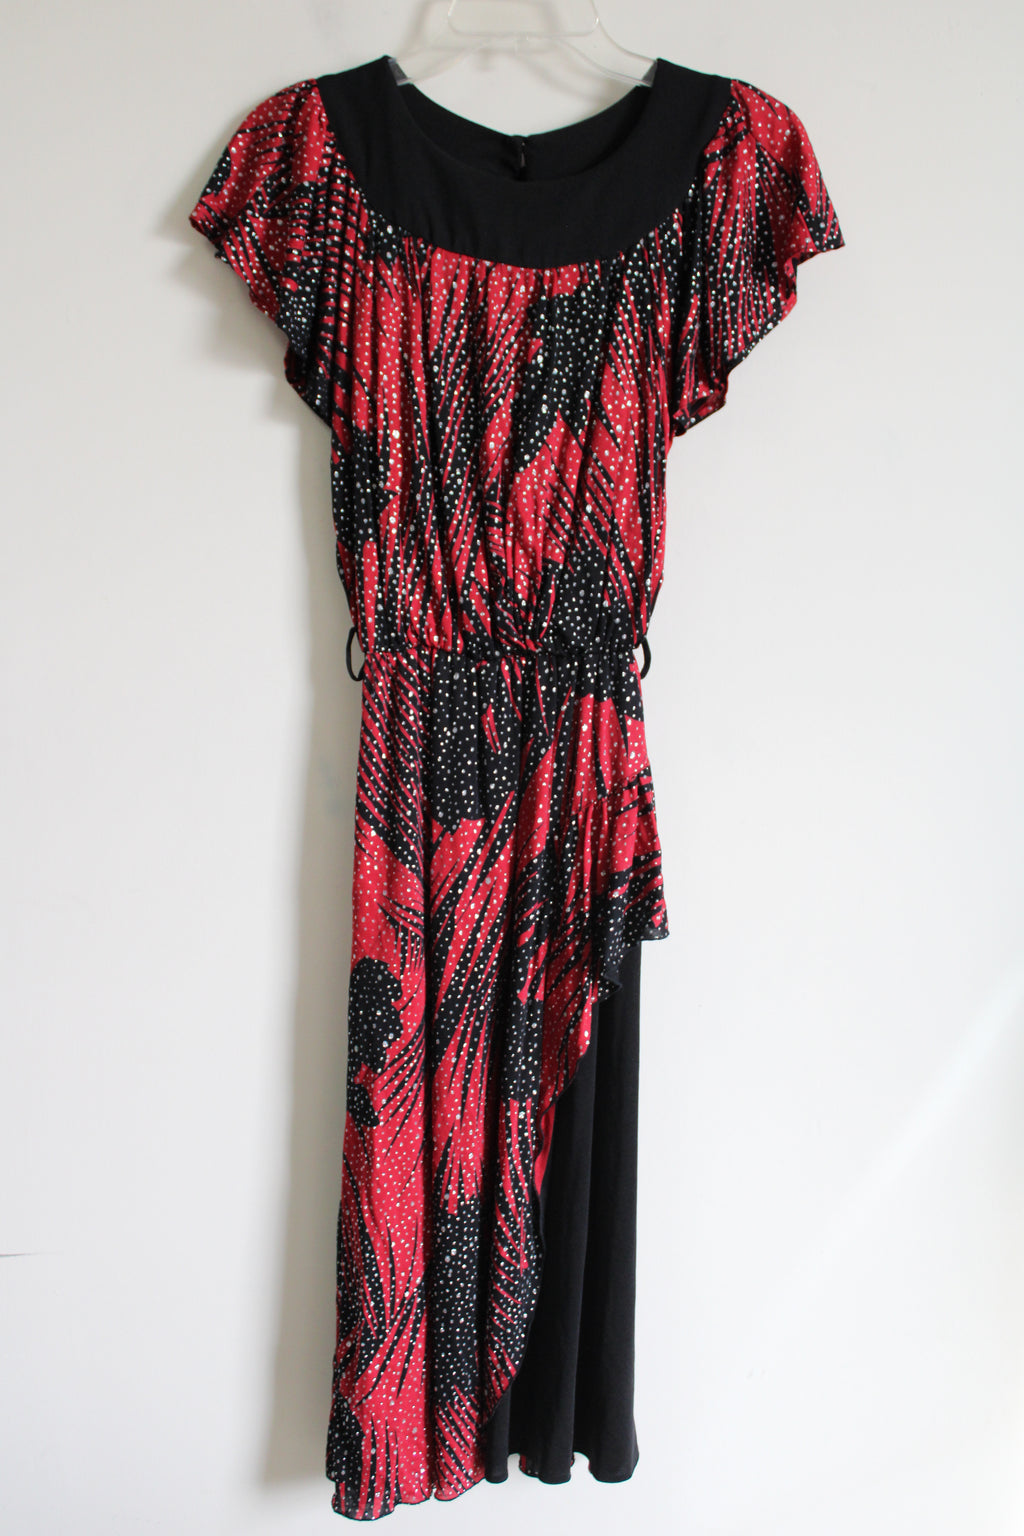 StepJo Paris Red & Black Shimmer Dress | S